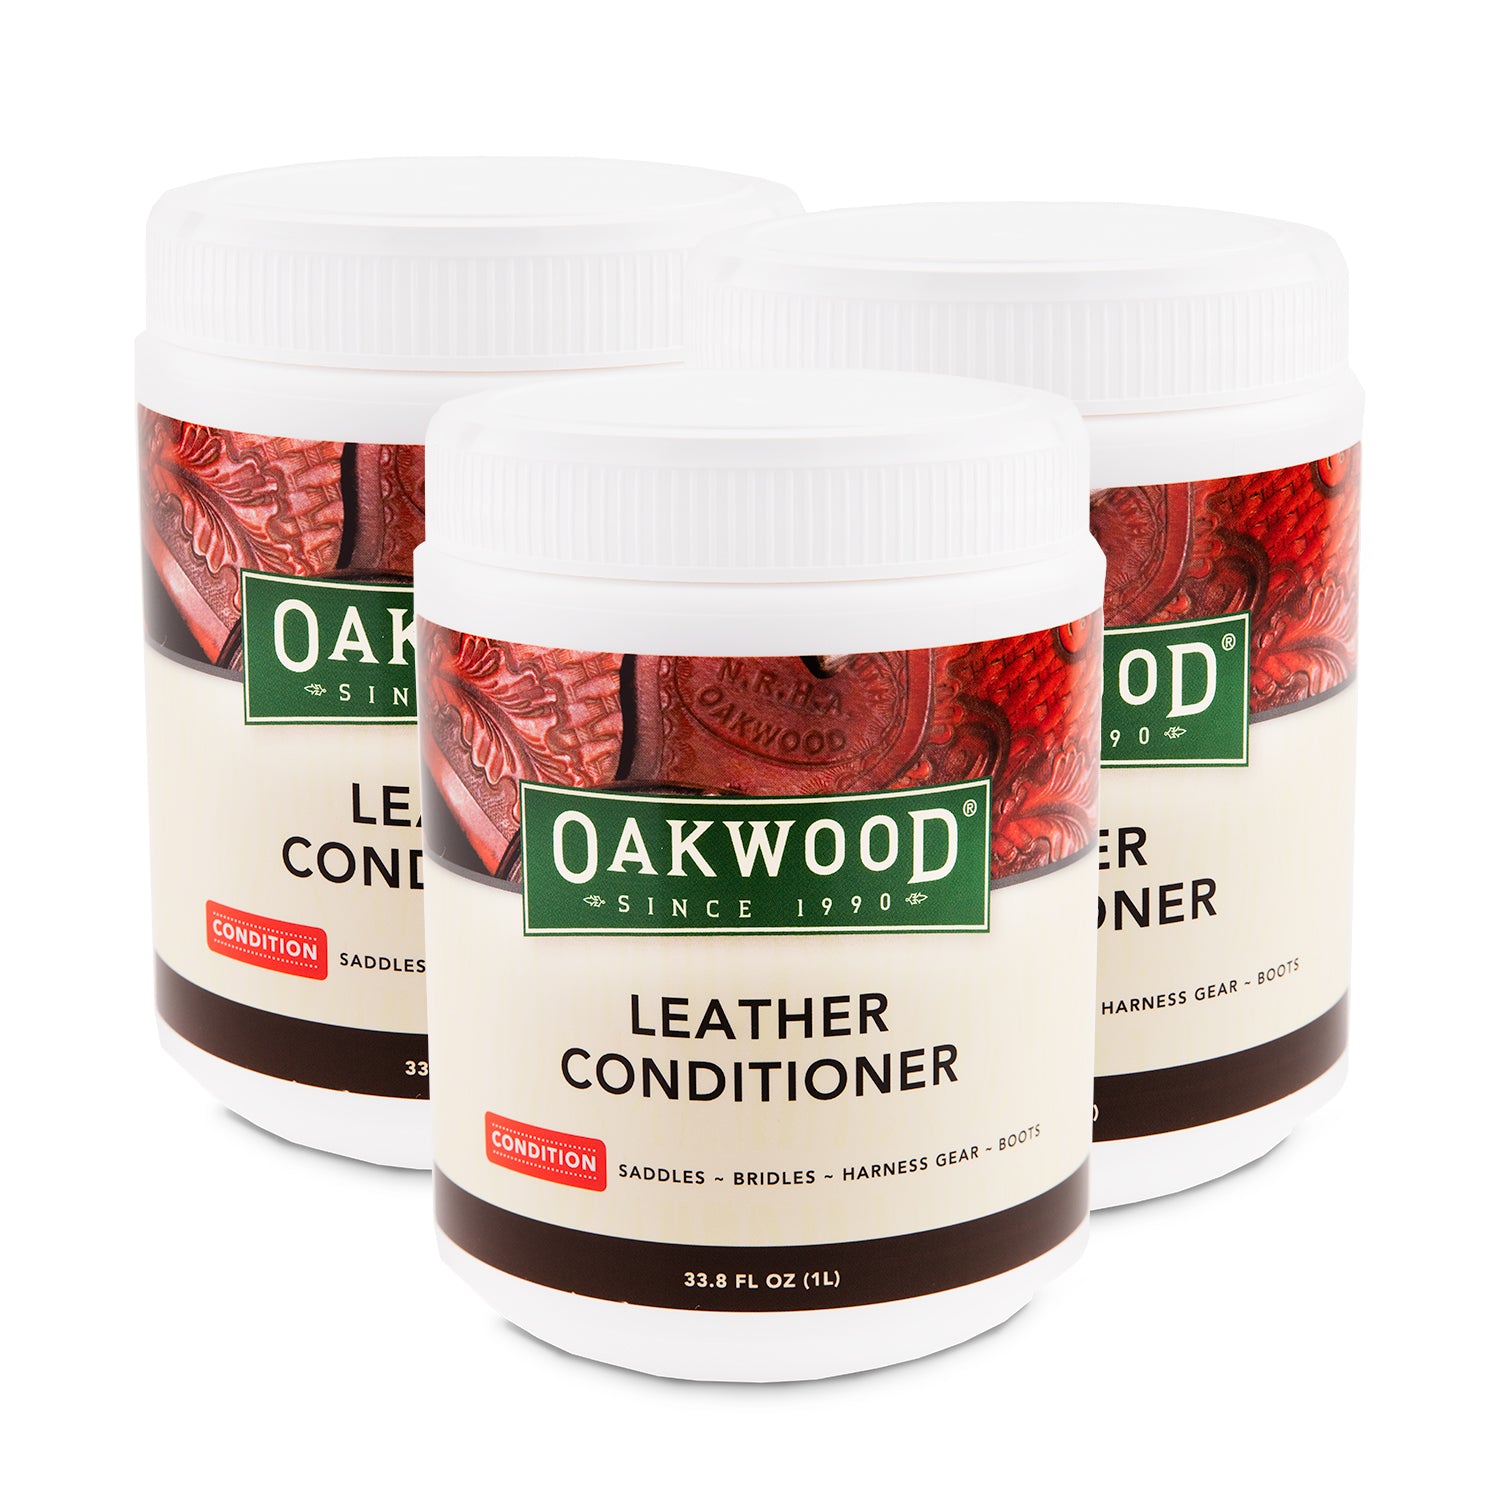 Oakwood Leather & Synthetic Wipes - 20 ct